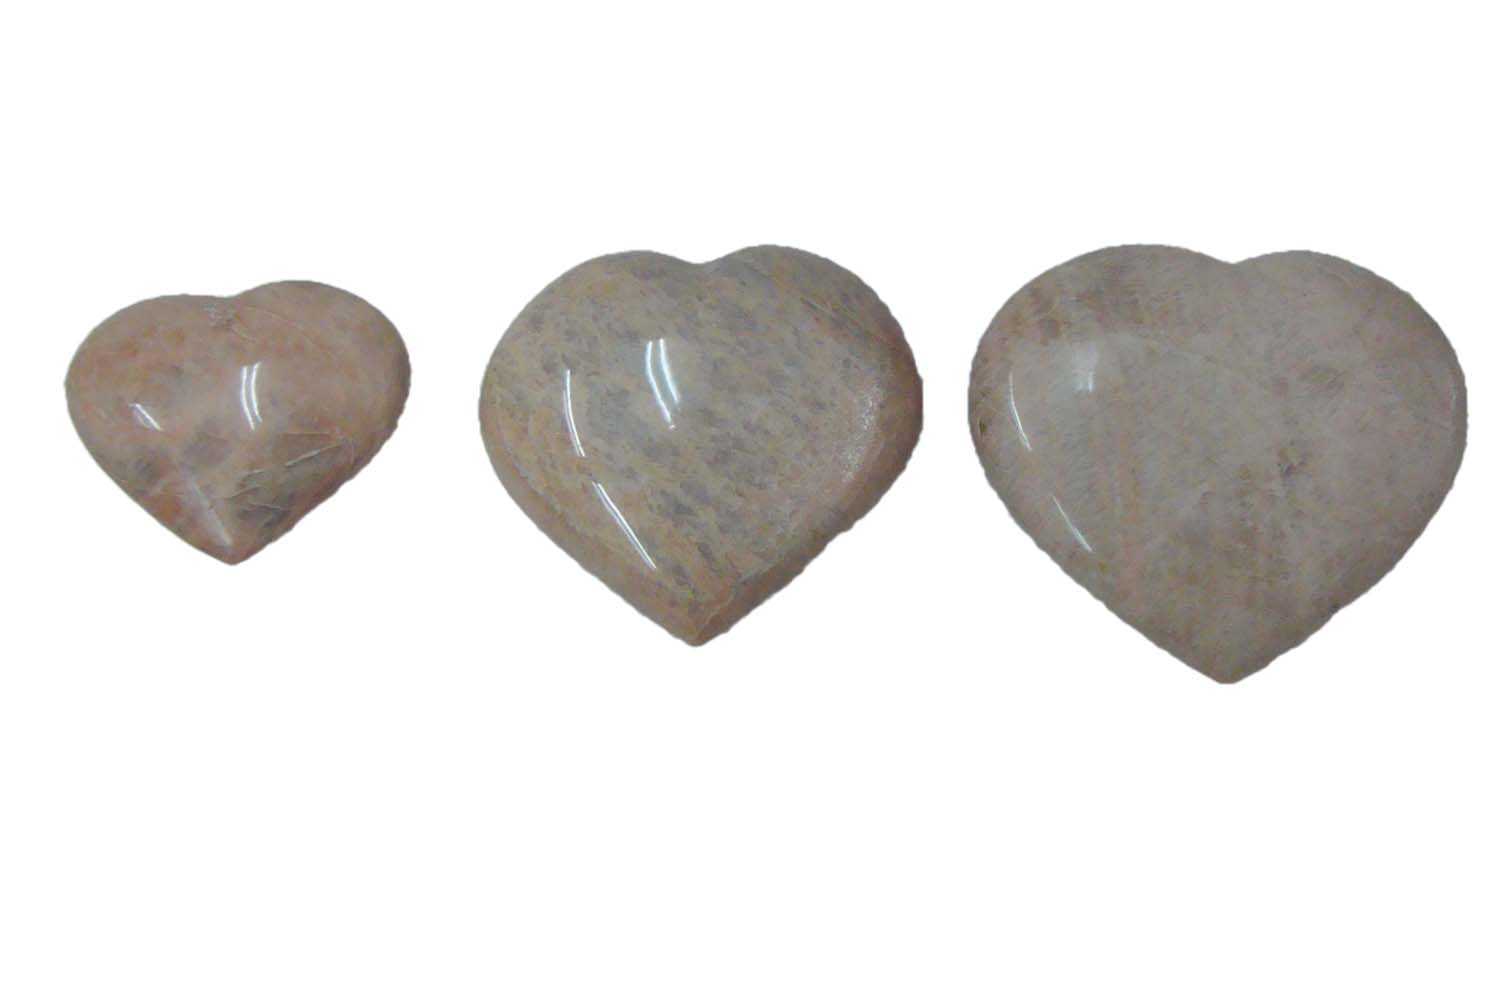 Peachmoon stone Heart